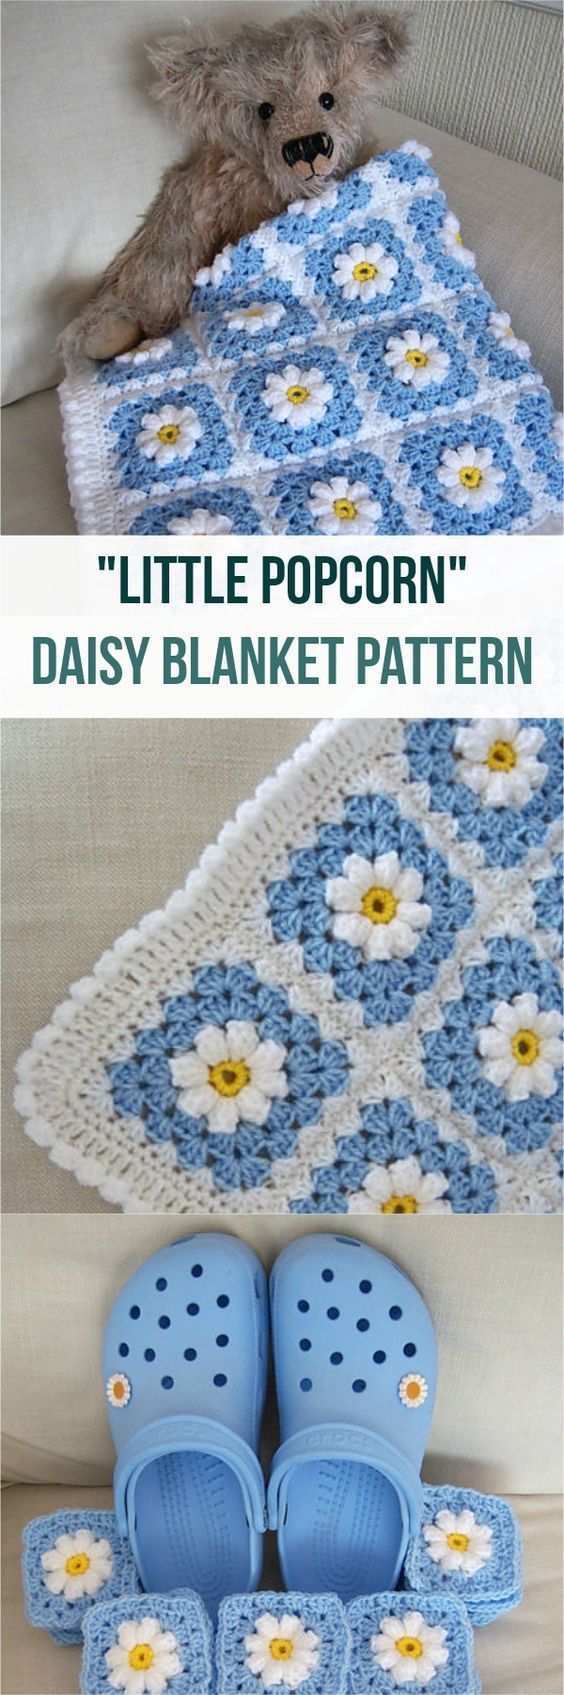 Little Popcorn Daisy Blanket Pattern Forest Orme Olmayan Desenler Krose Krose Dikisler